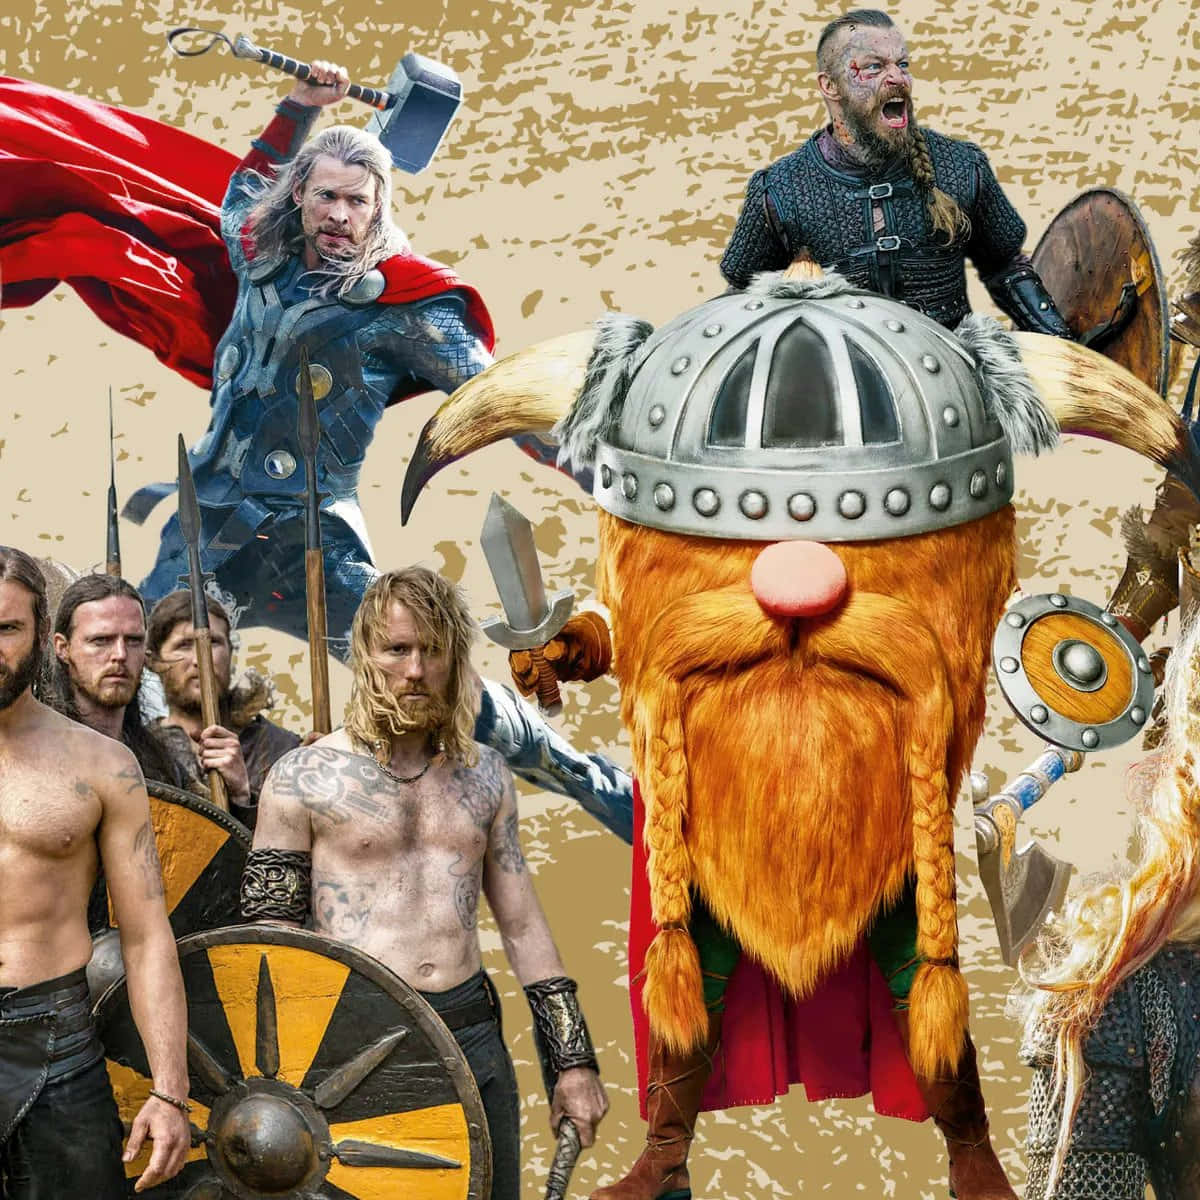 Viking warriors; ready for battle